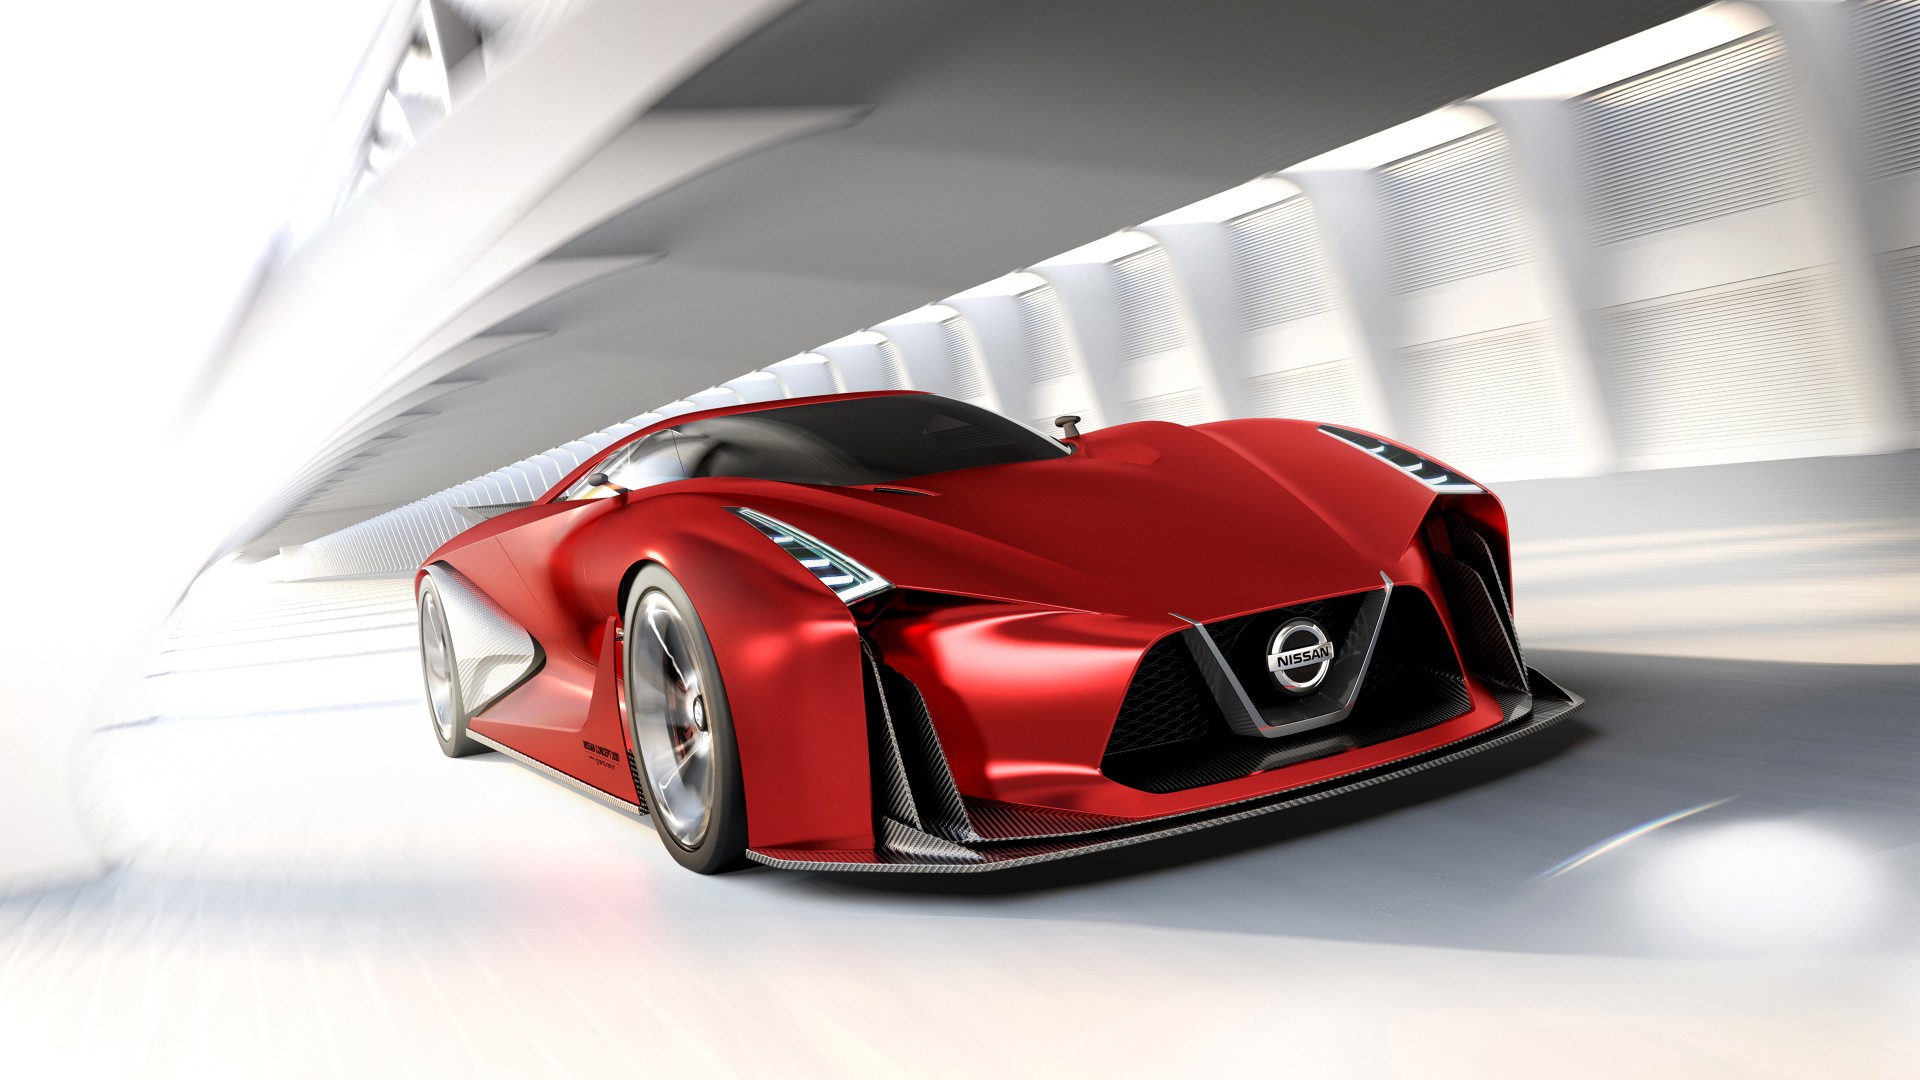 Nissan Concept 2020 Vision Gran Turismo 2 Wallpaper | HD ...